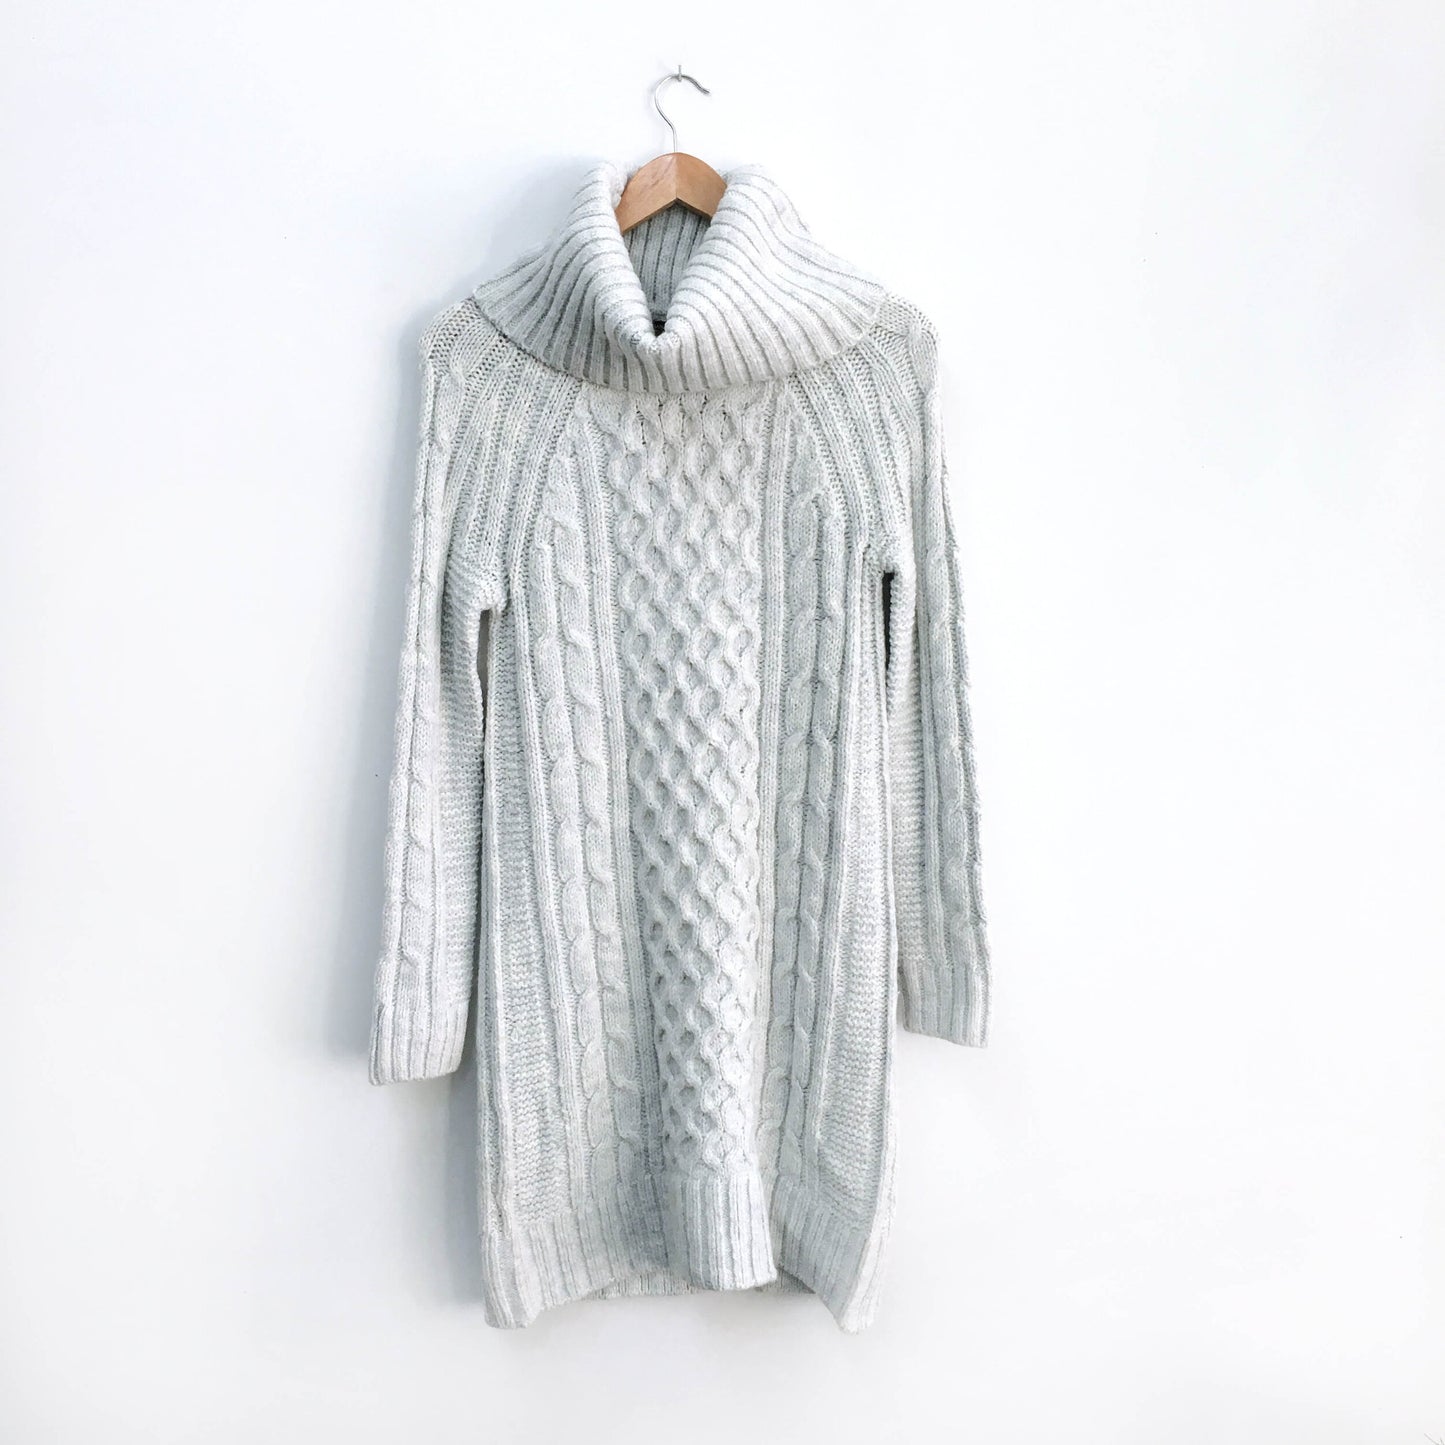 Banana Republic Cable-knit Turtleneck dress - size xs